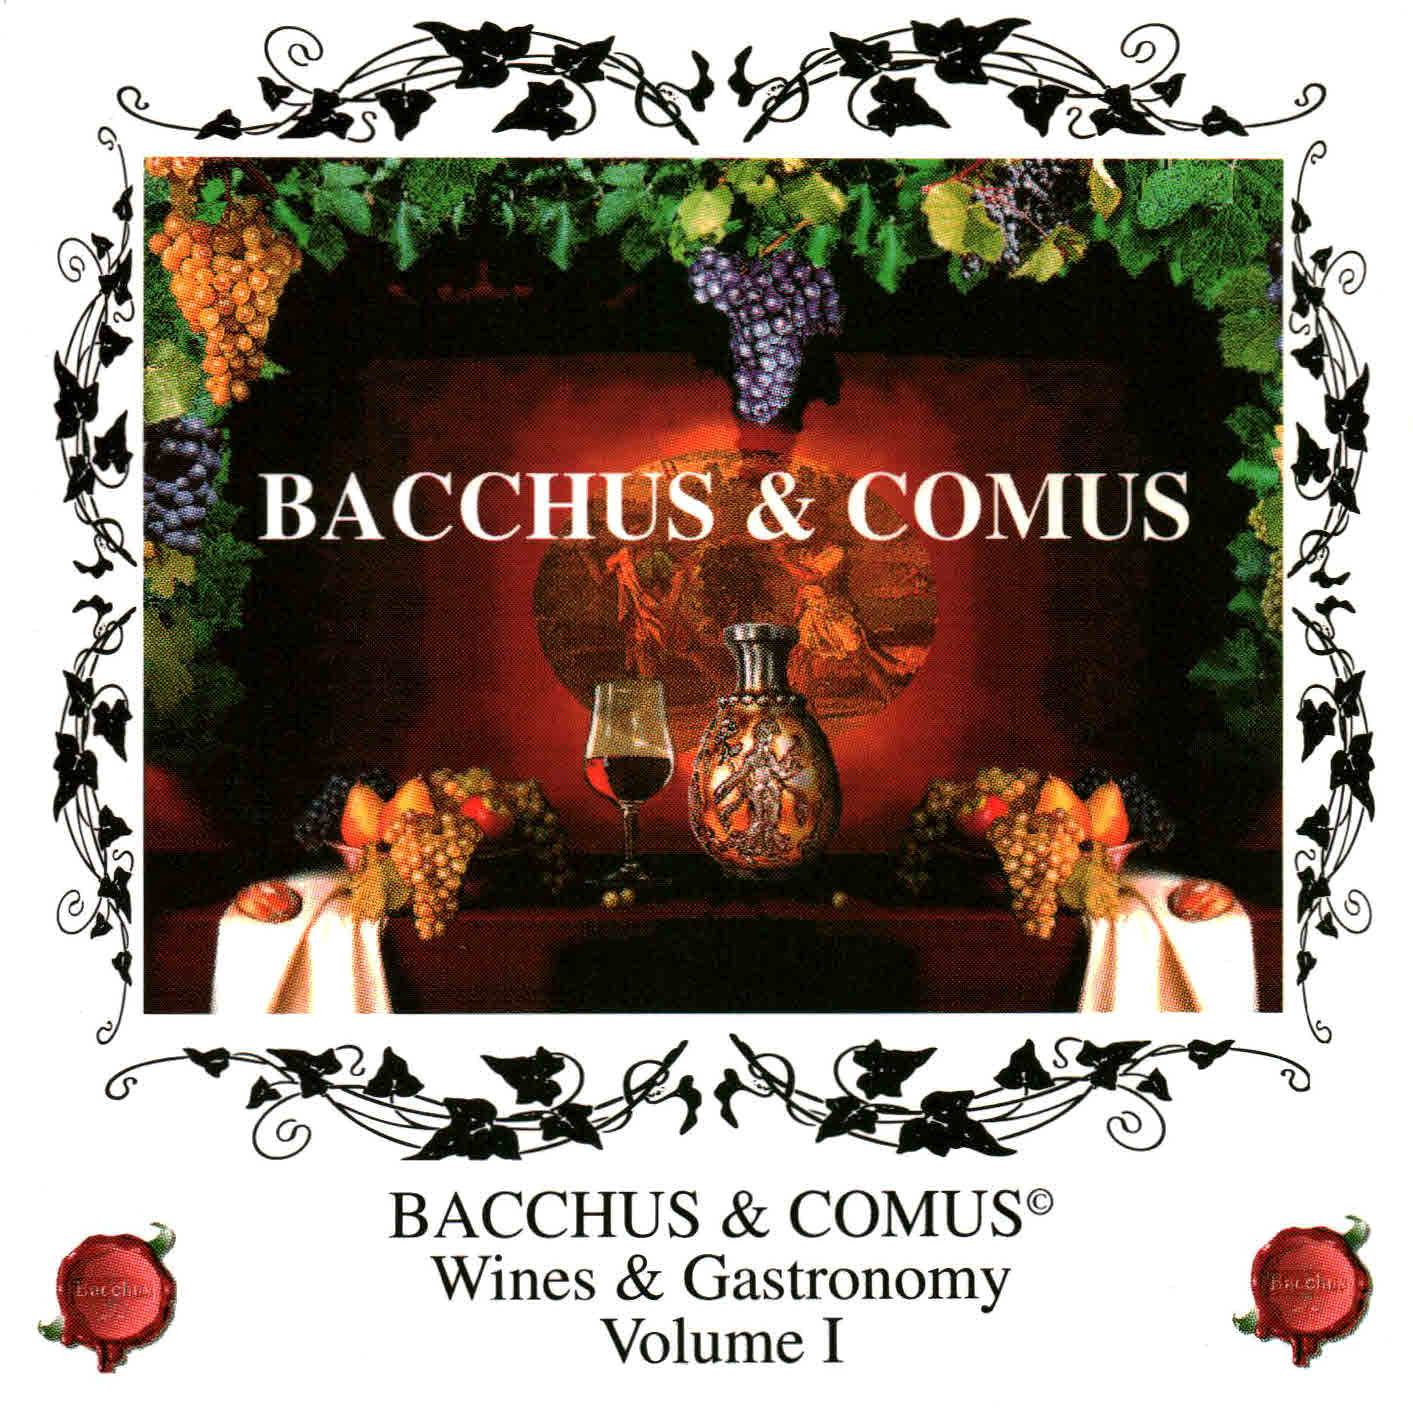 Bacchus & Comus Wines & Gastronomy Volume 1